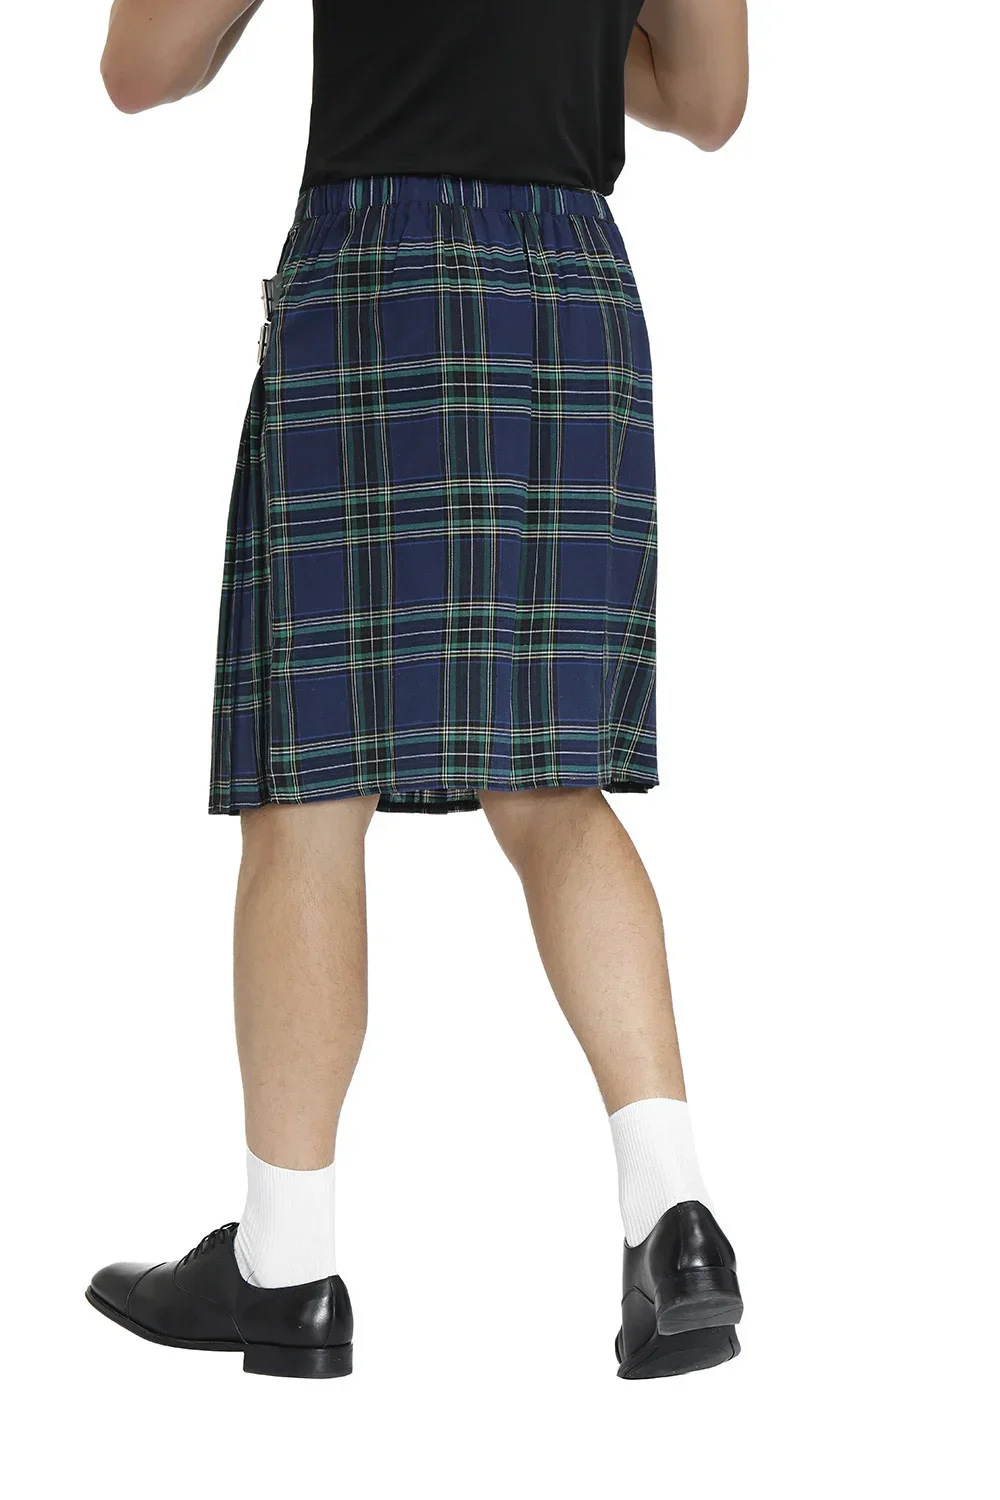 Cinturón a cuadros tradicional de Escocia Kilt para hombre, cadena  Bilateral plisada, gótico, Punk, Hip-hop, pantalones de tartán escoceses de  vanguardia, faldas - AliExpress